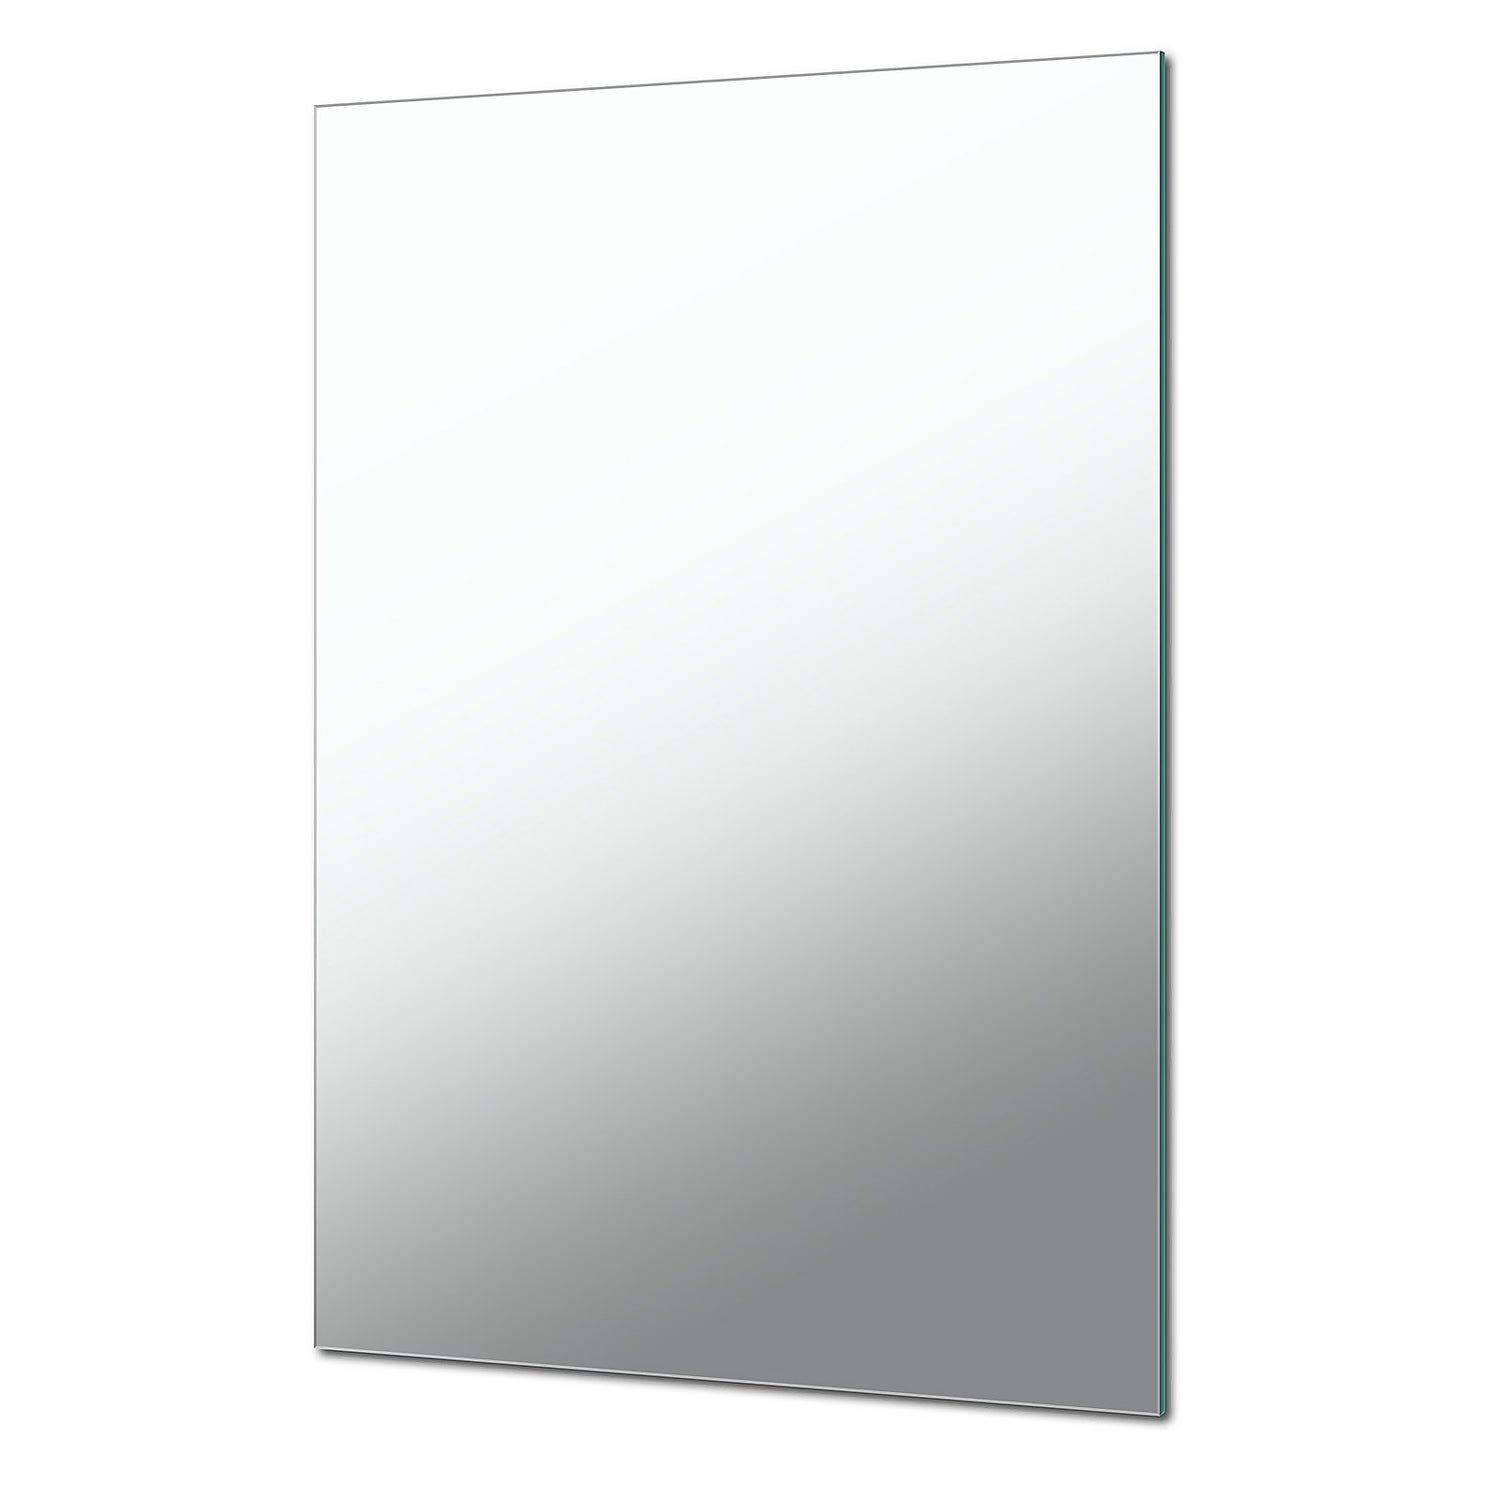 Rectangular Wall Mounted Bathroom Mirror - 50x70cm